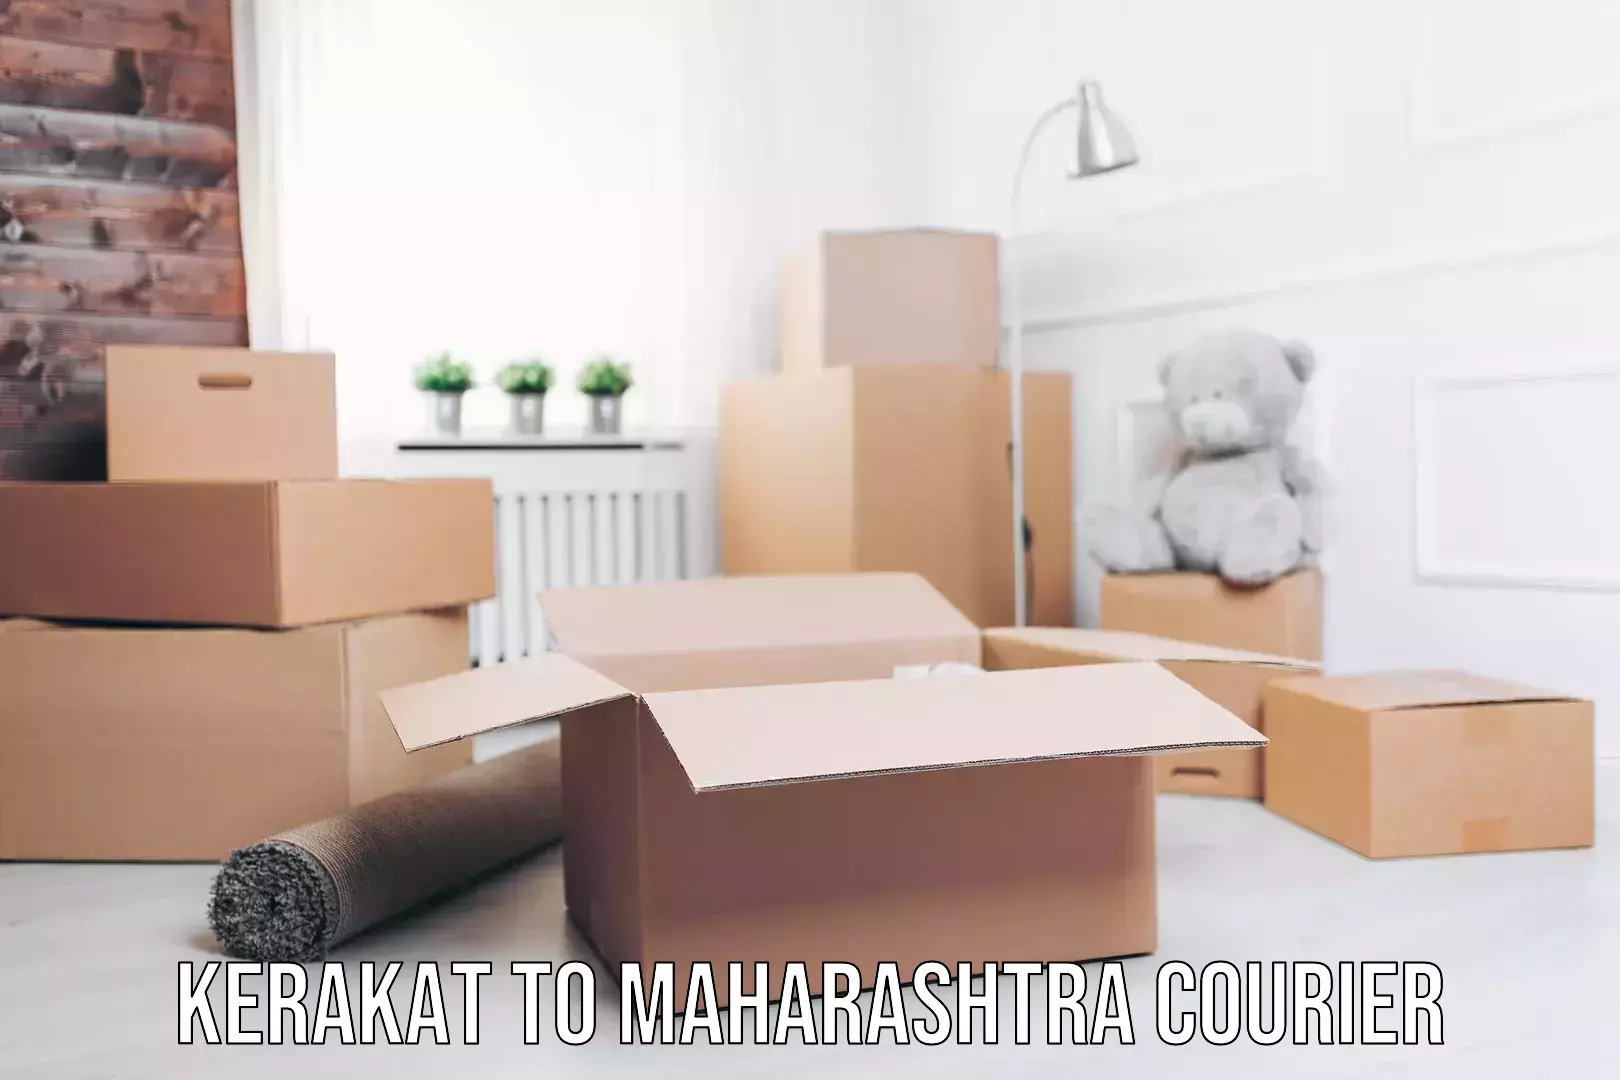 Moving and packing experts Kerakat to Maharashtra